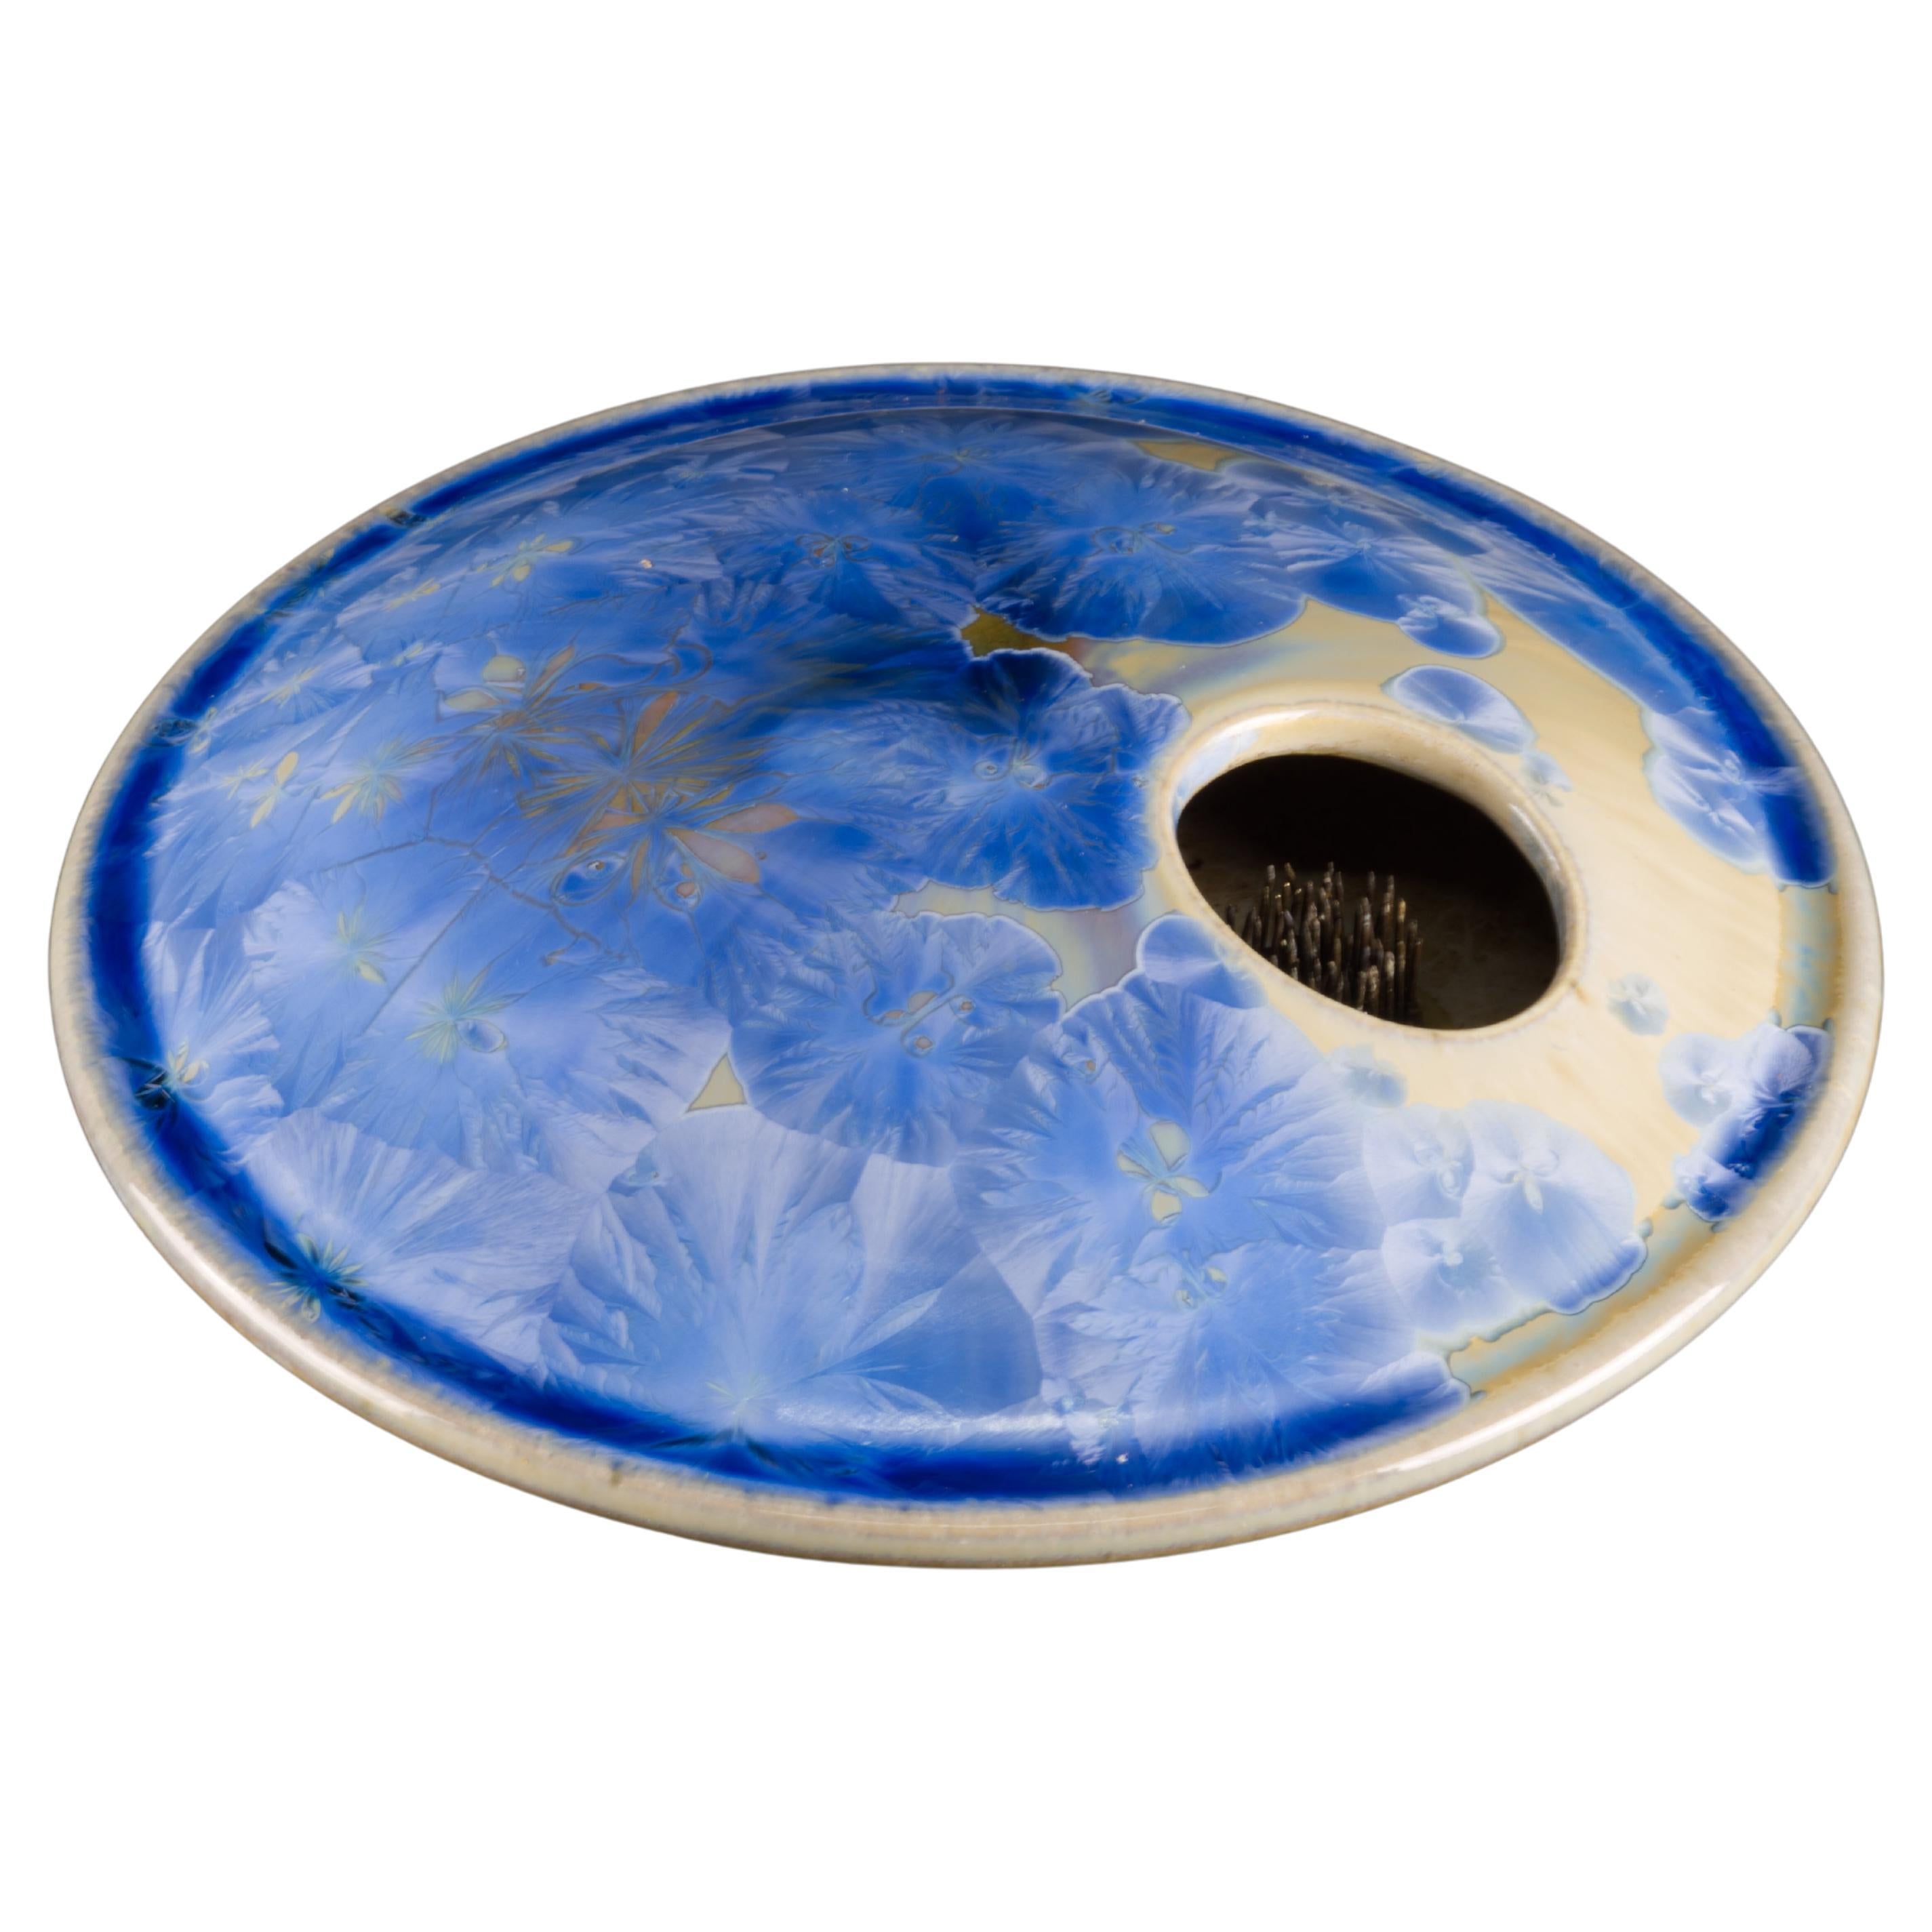 Ikebana-Vase aus Keramik mit Kristallglasur und Kristallglasur, blau, American Studio Pottery, 2003 im Angebot